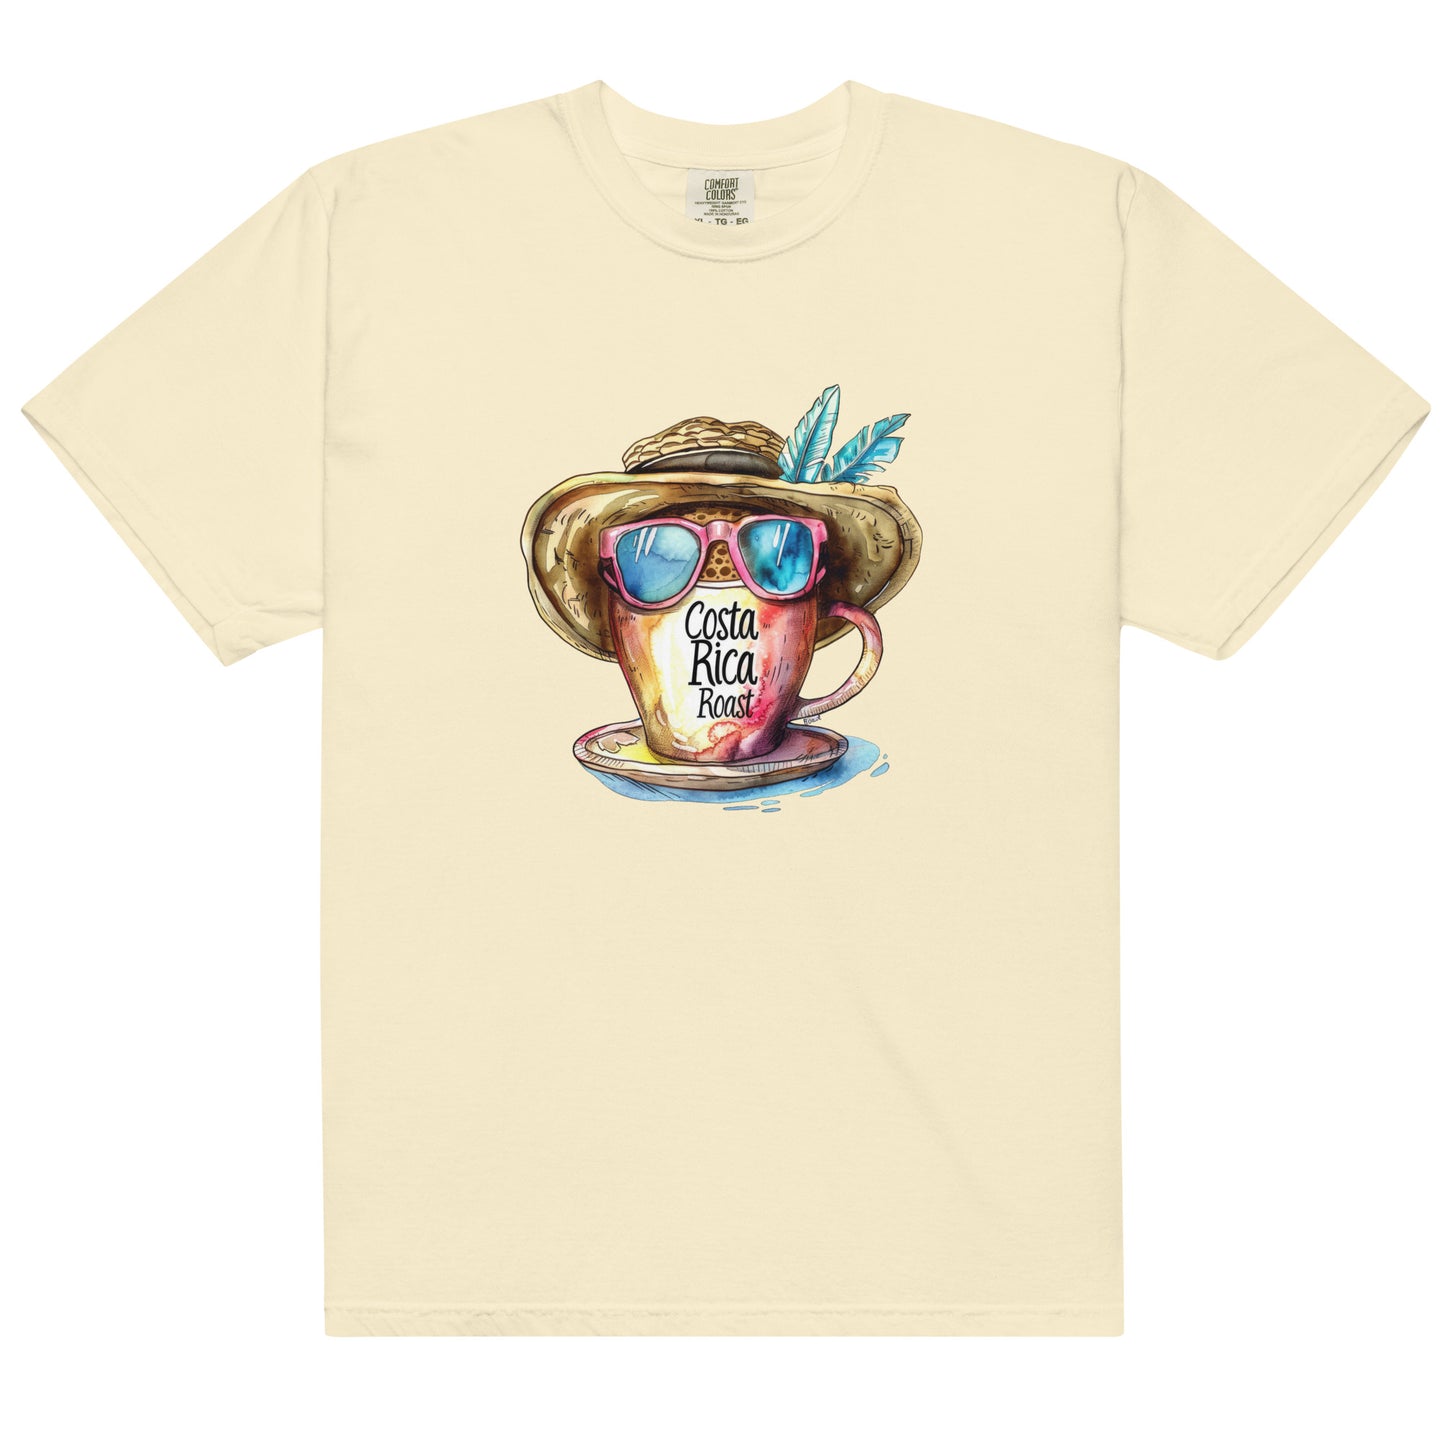 Costa Rica Coffee Roast t-shirt - Unisex